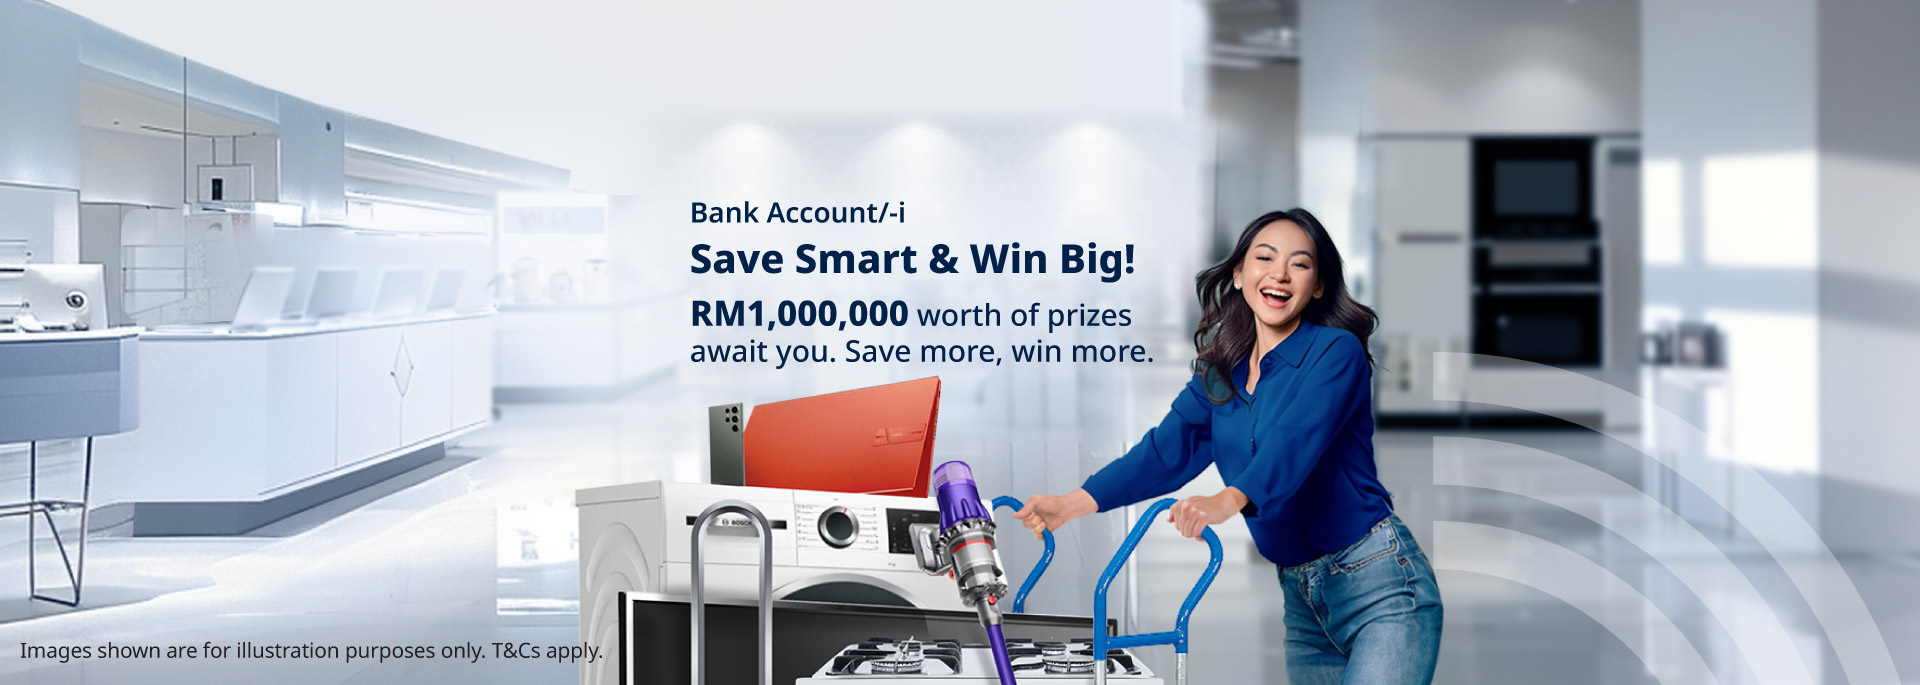 Save Smart & Win Big Campaign